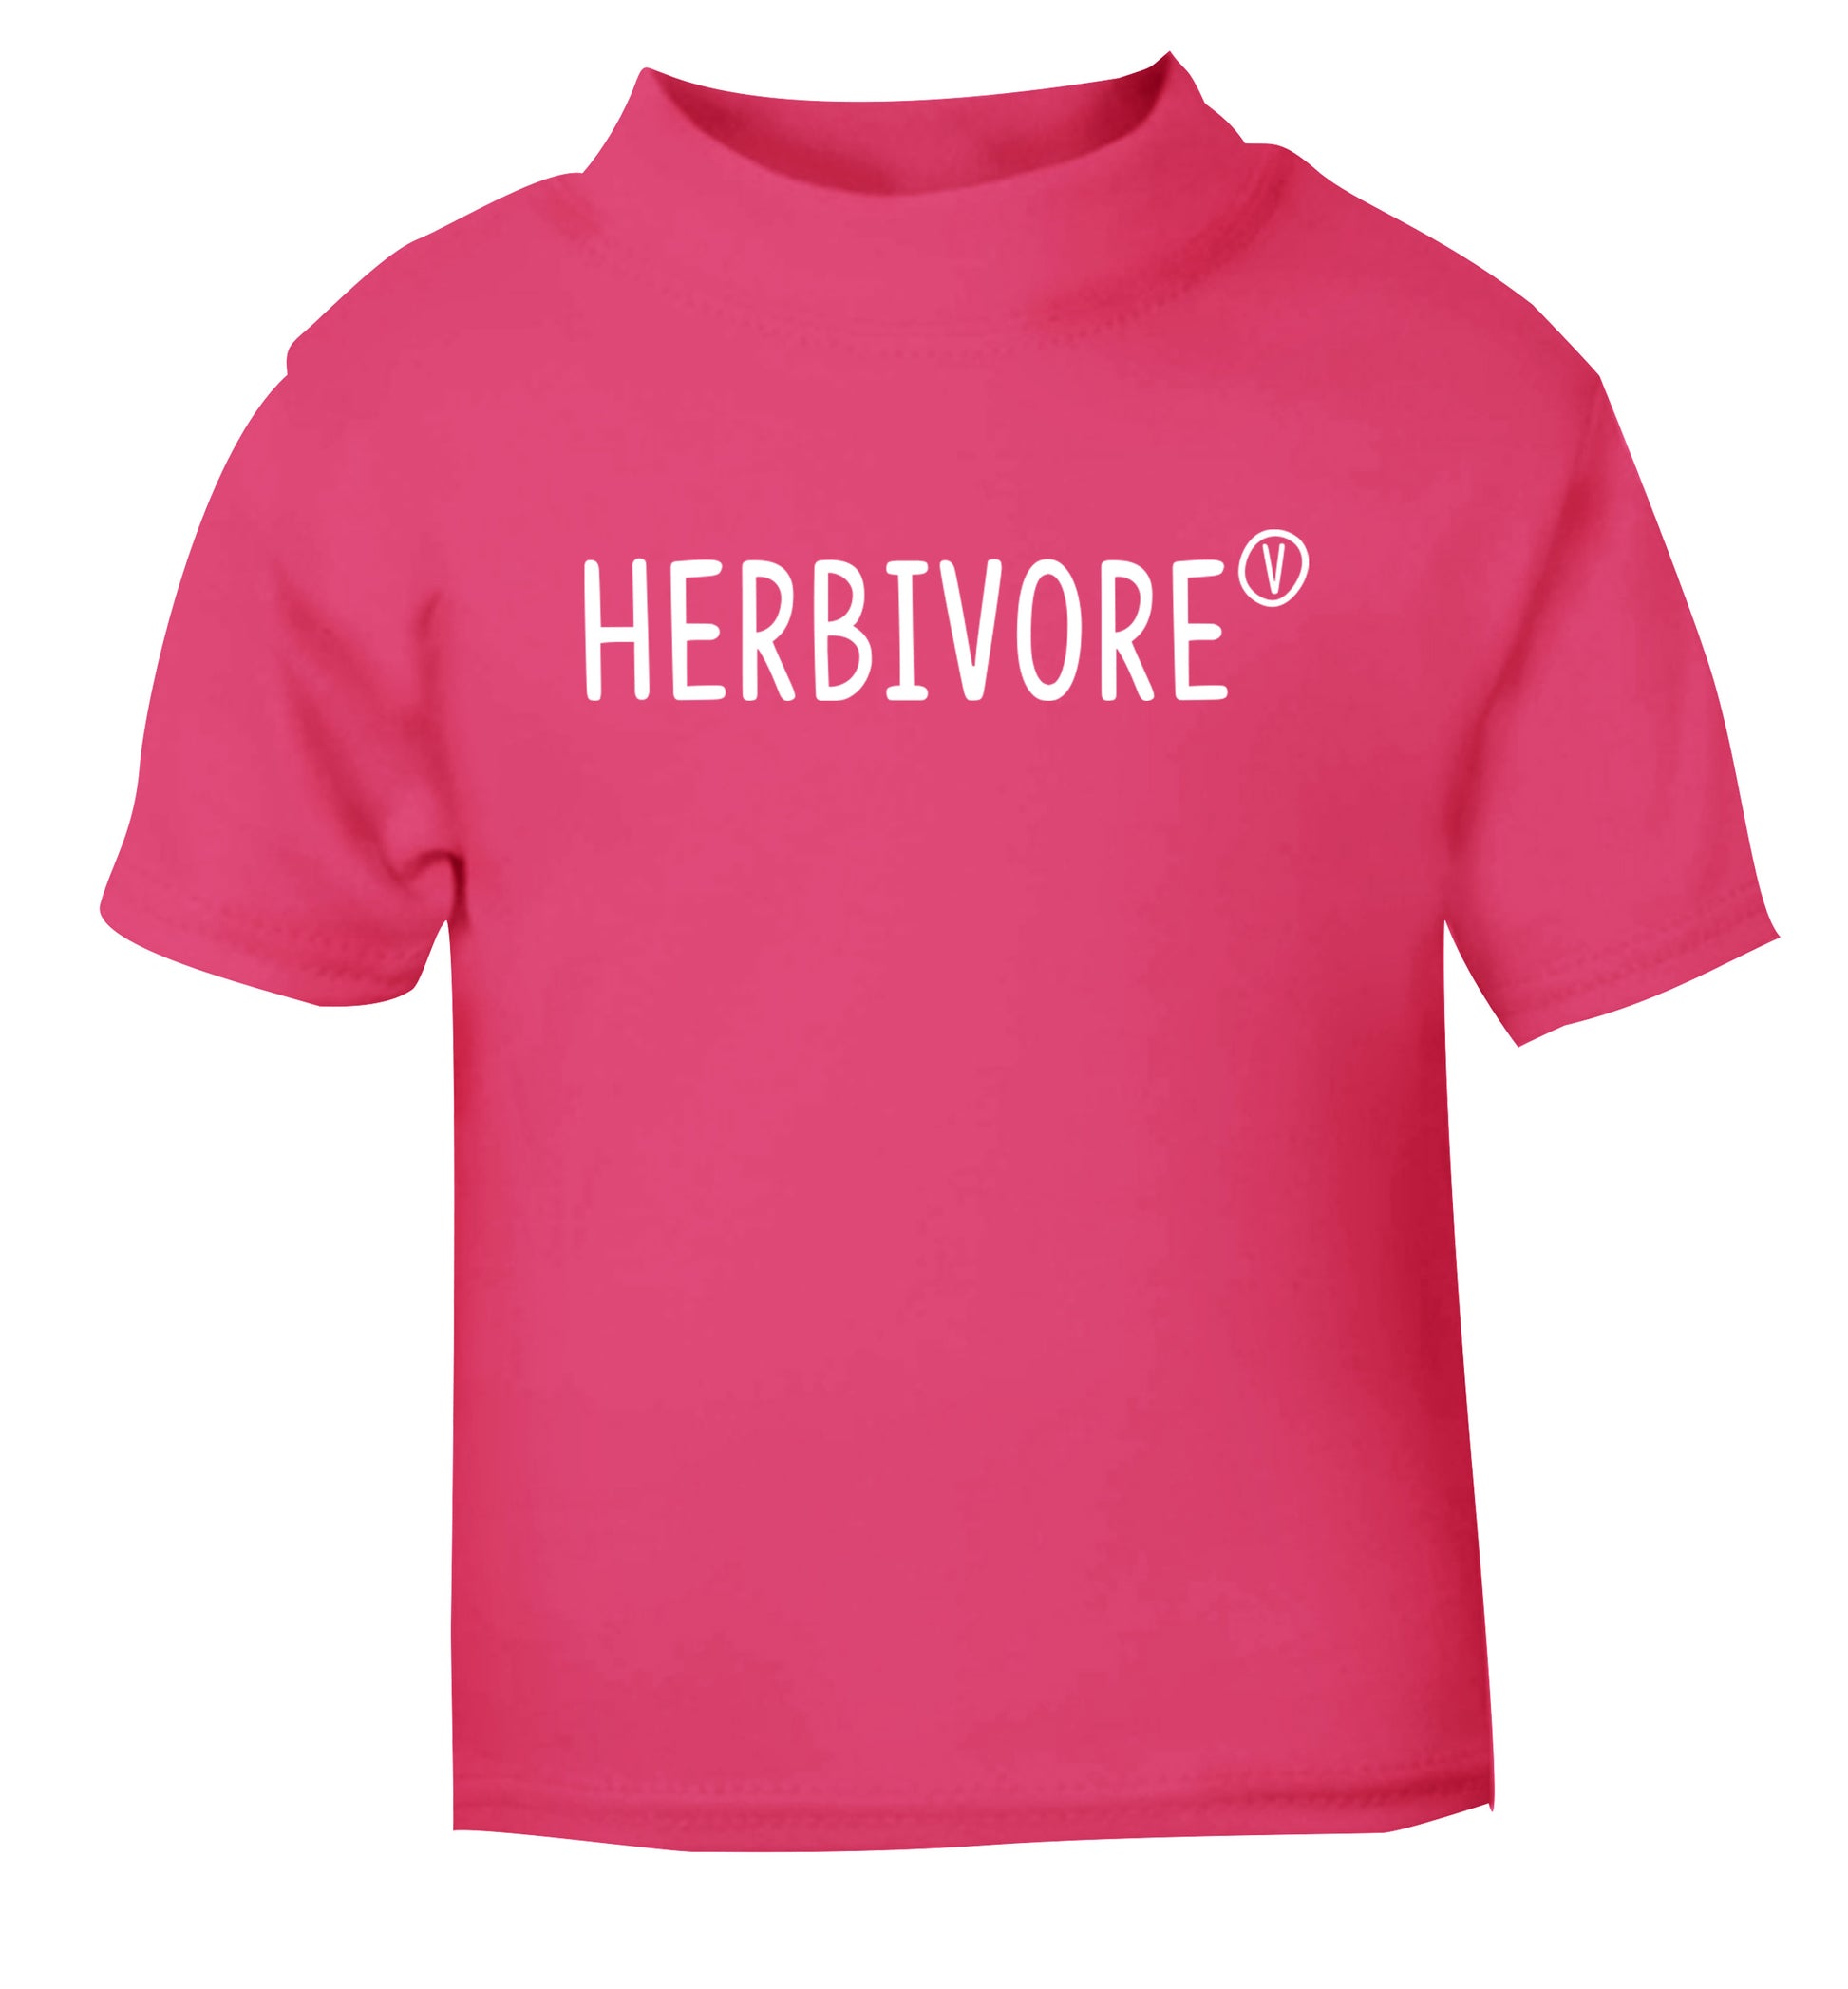 Herbivore pink Baby Toddler Tshirt 2 Years